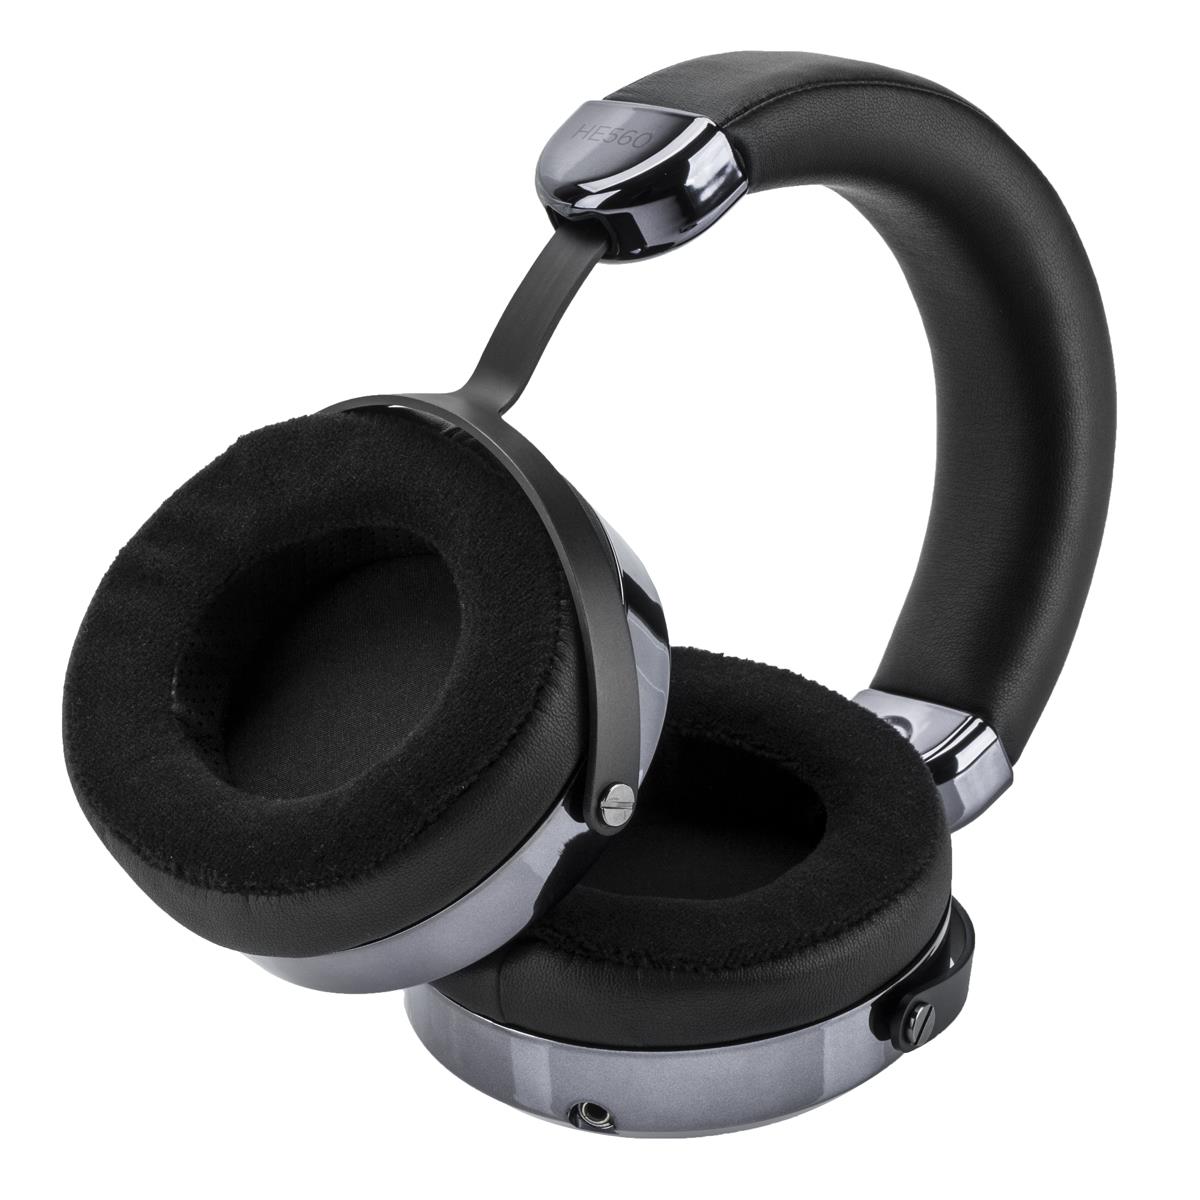 HiFiMan HE-560 V4 Planar Magnetic Headphone $269 + Free Shipping @ Adorama